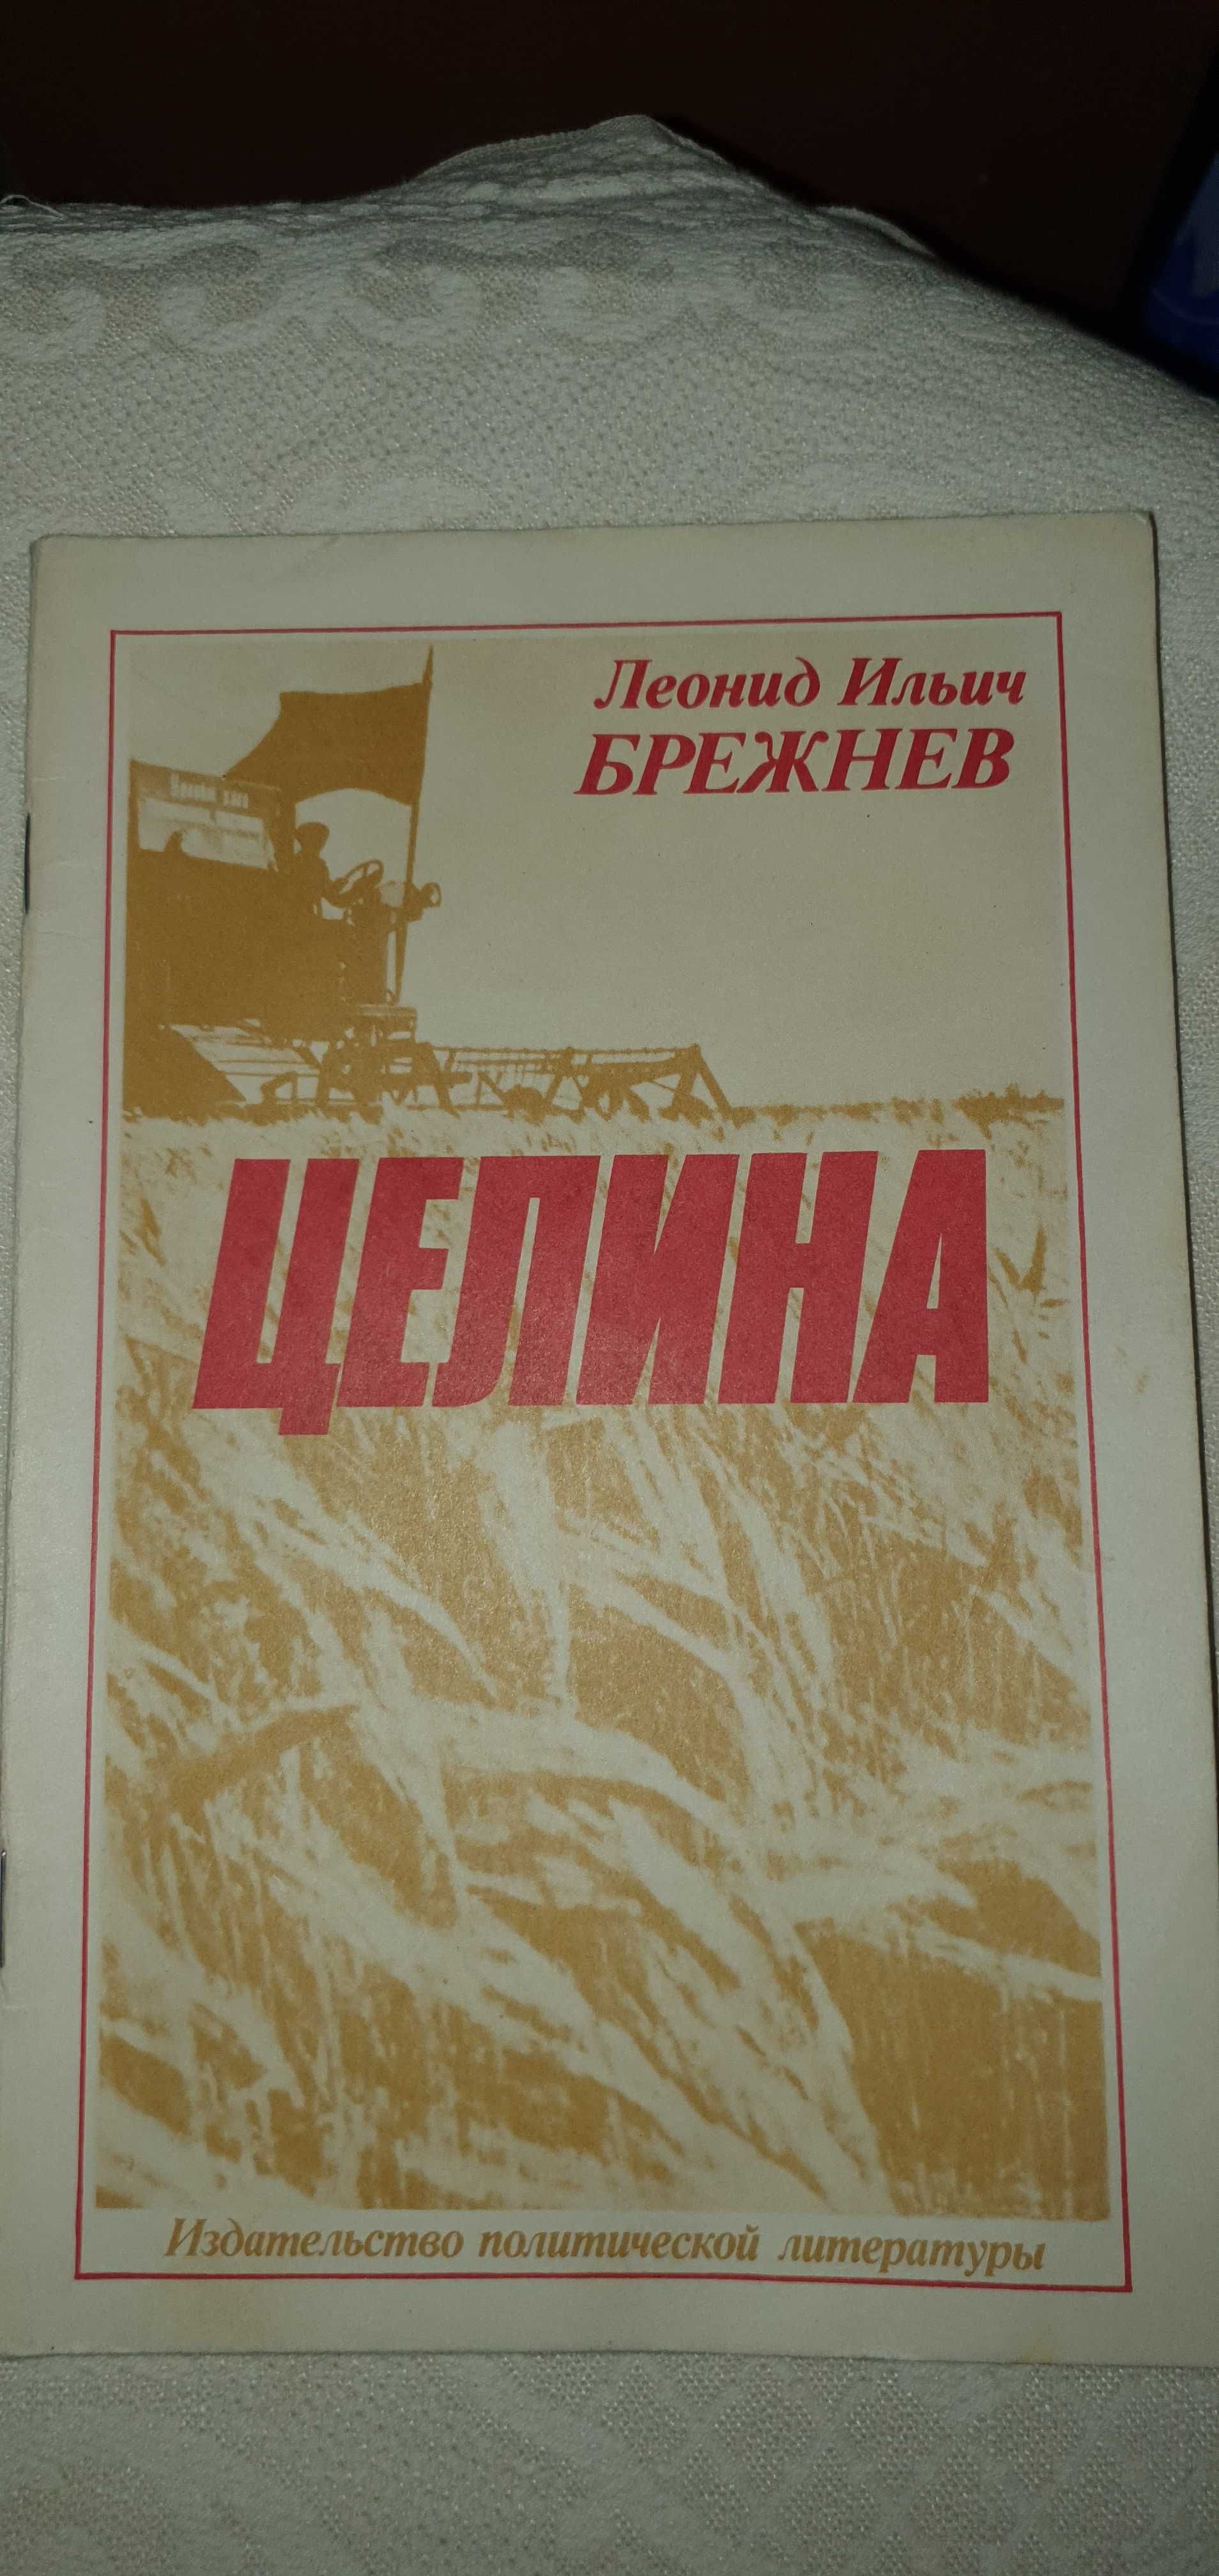 Задачи союза молодежи, В.И.Ленин